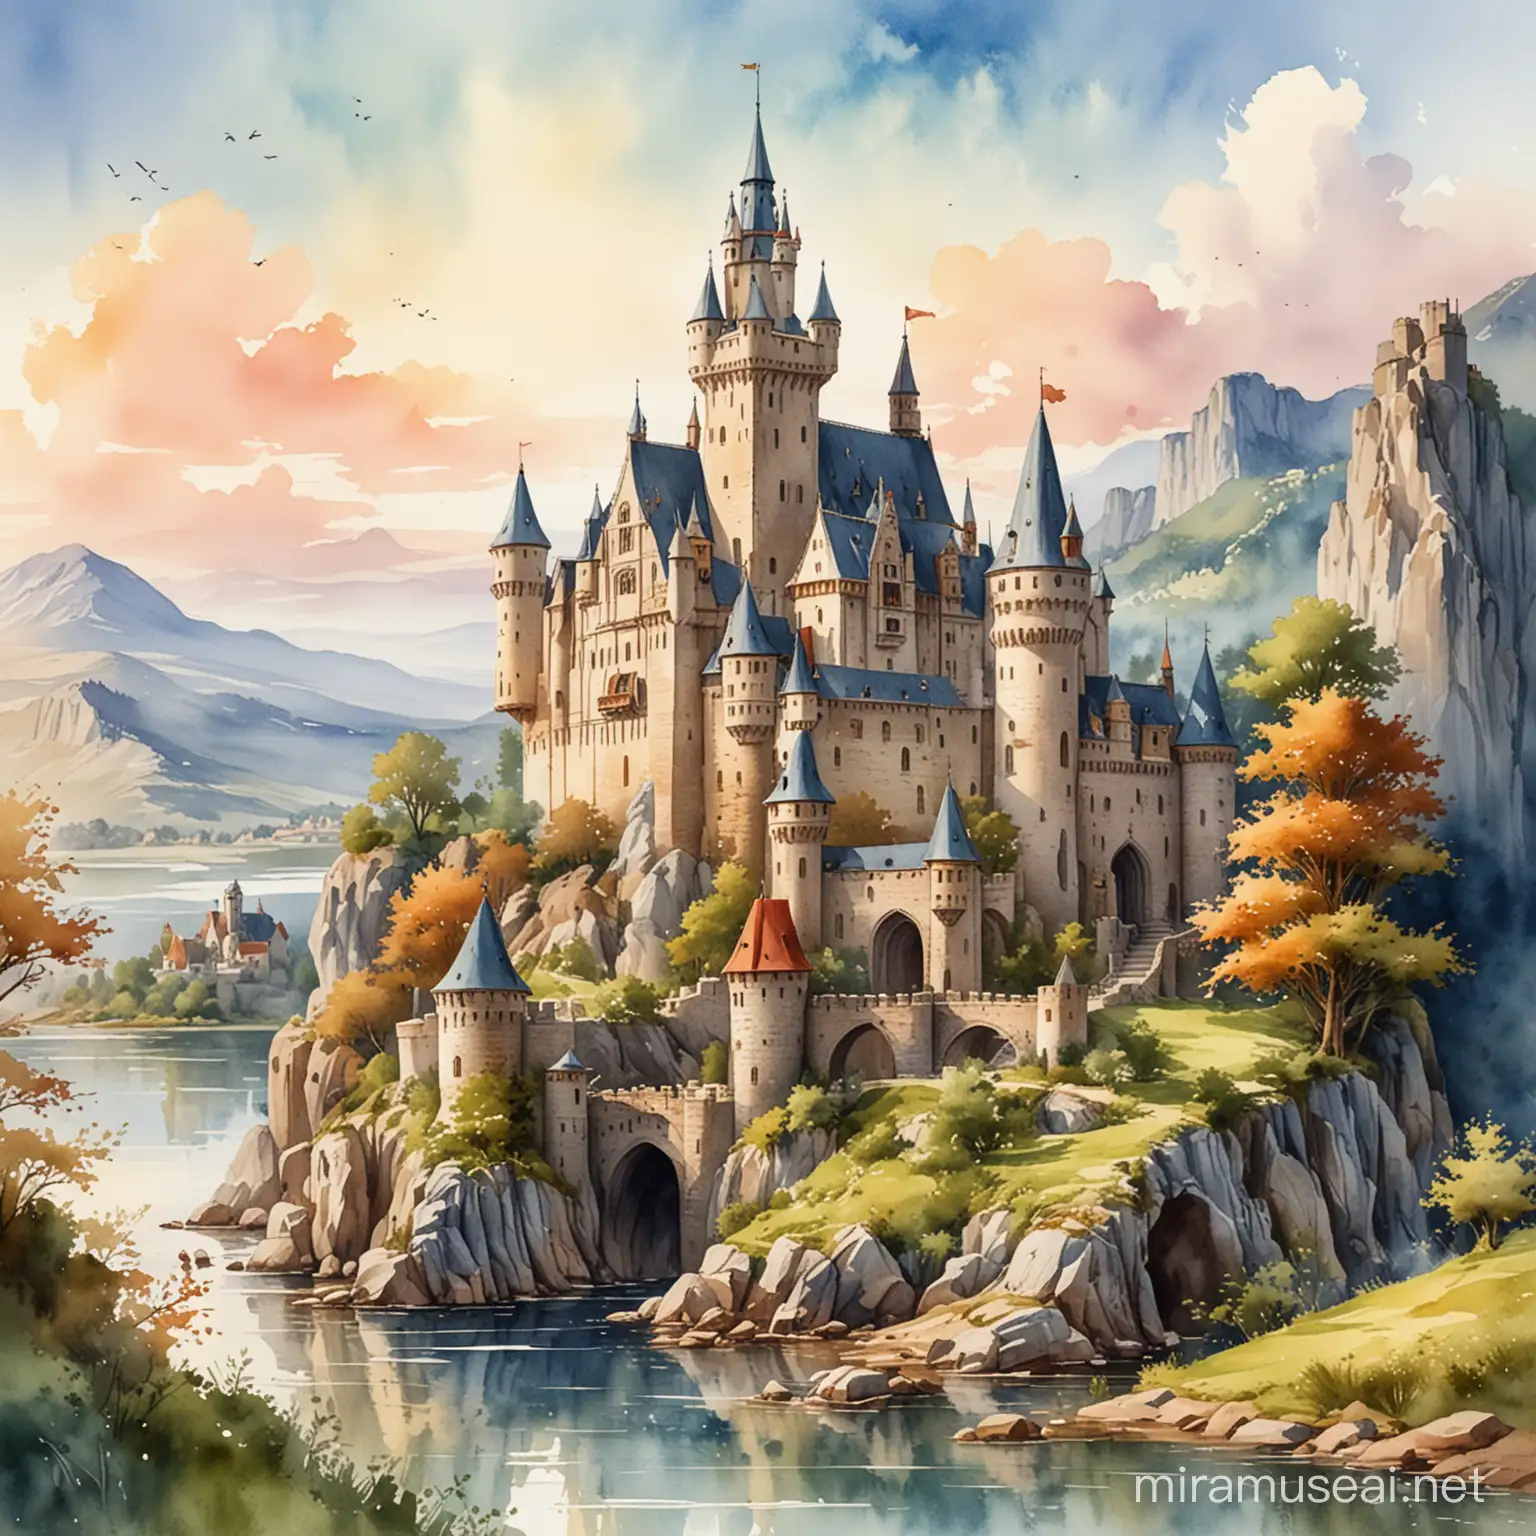 Watercolor Medieval Castle Illustration Serene Landscape View